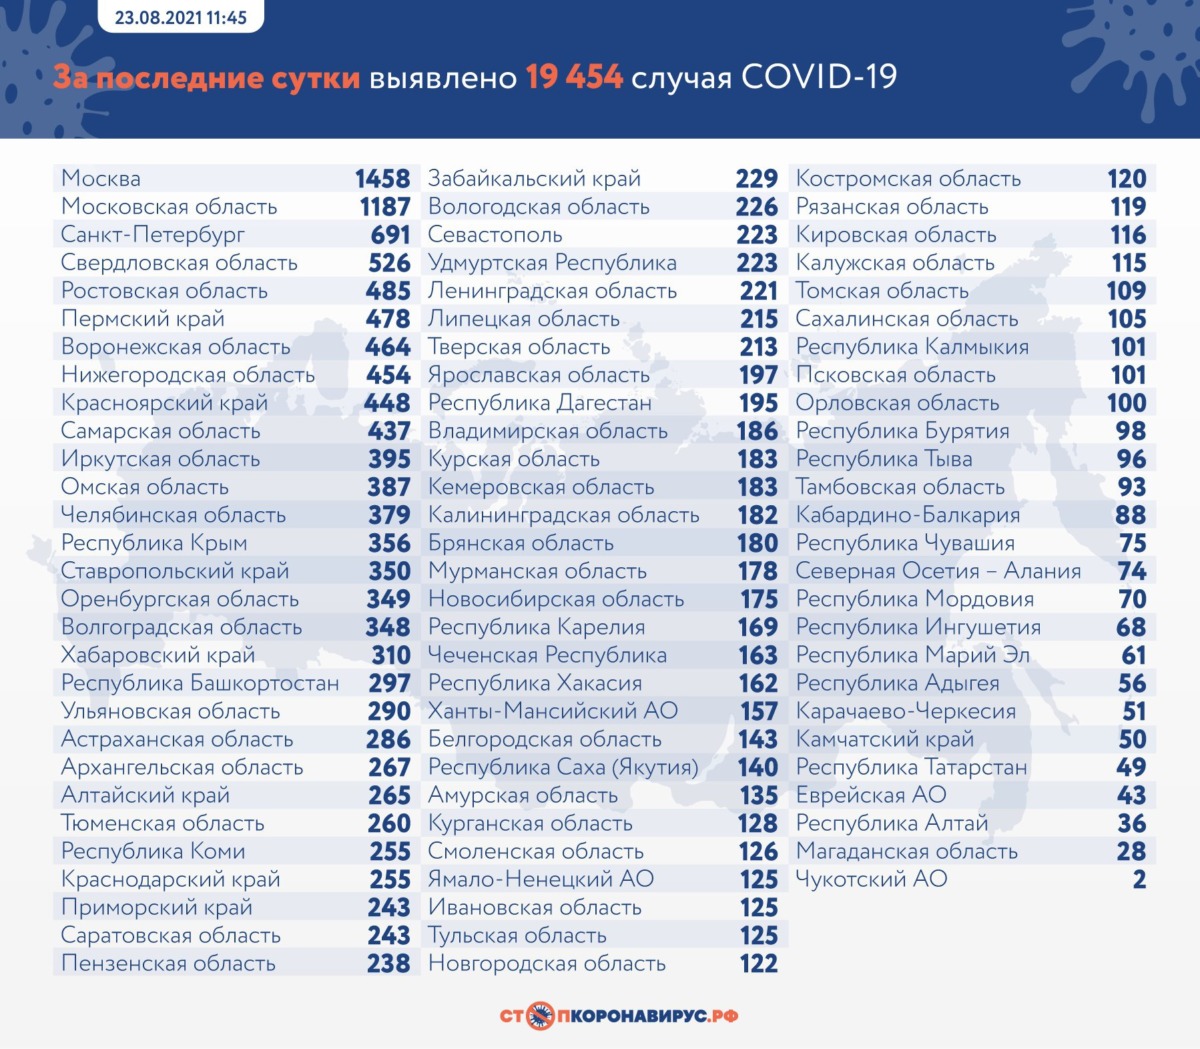 Оперативная статистика по коронавирусу в России на 23 августа